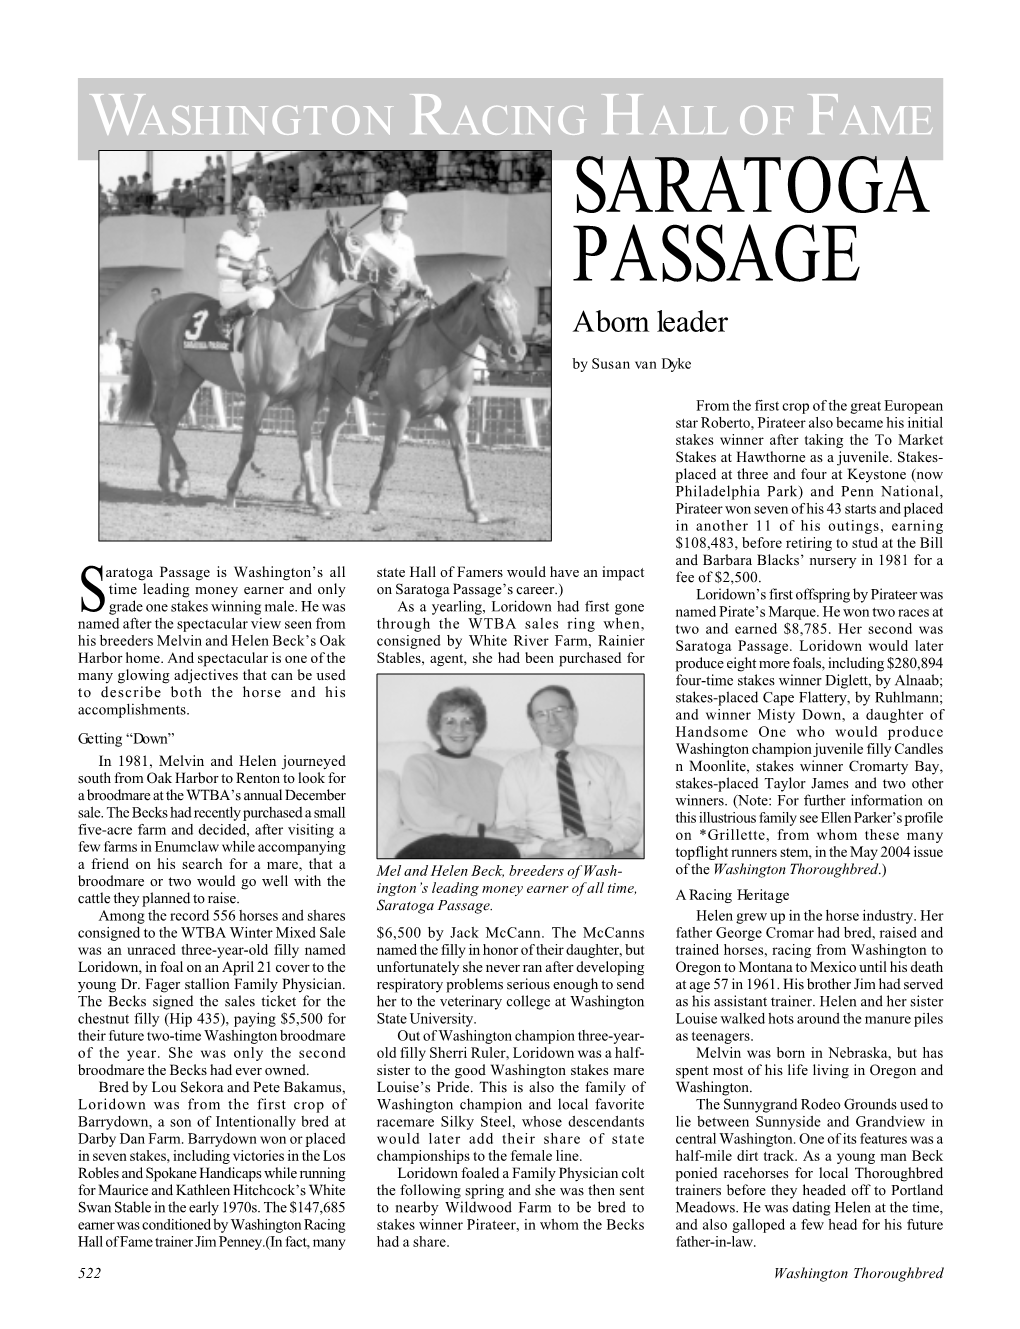 SARATOGA PASSAGE a Born Leader